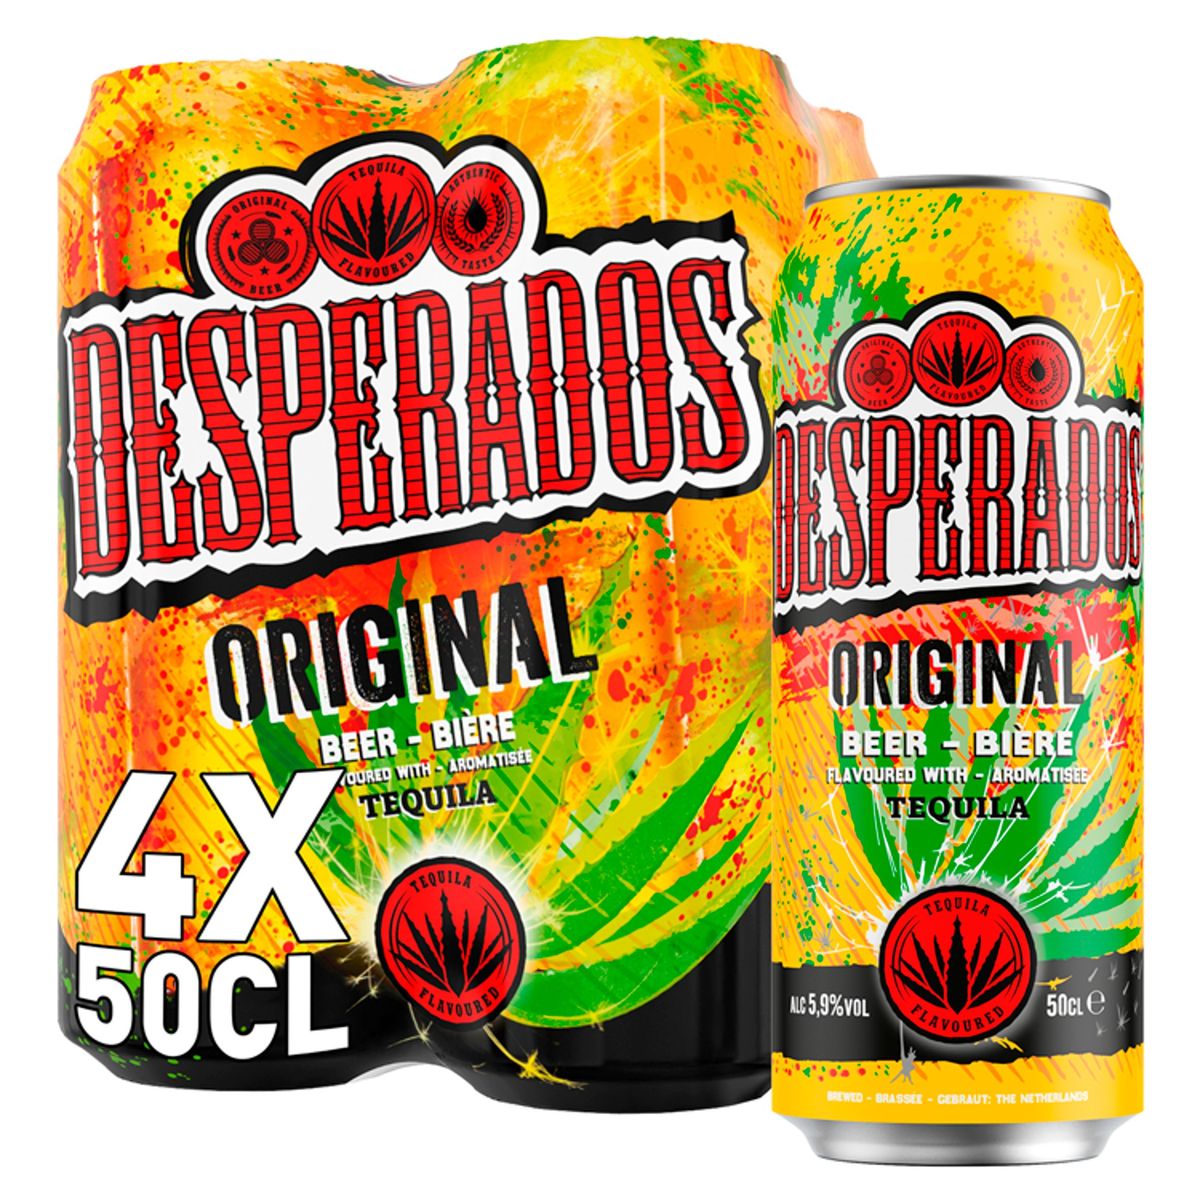 Desperados Original Bier Gearomatiseerd met Aguardiente 4 x 500 ml